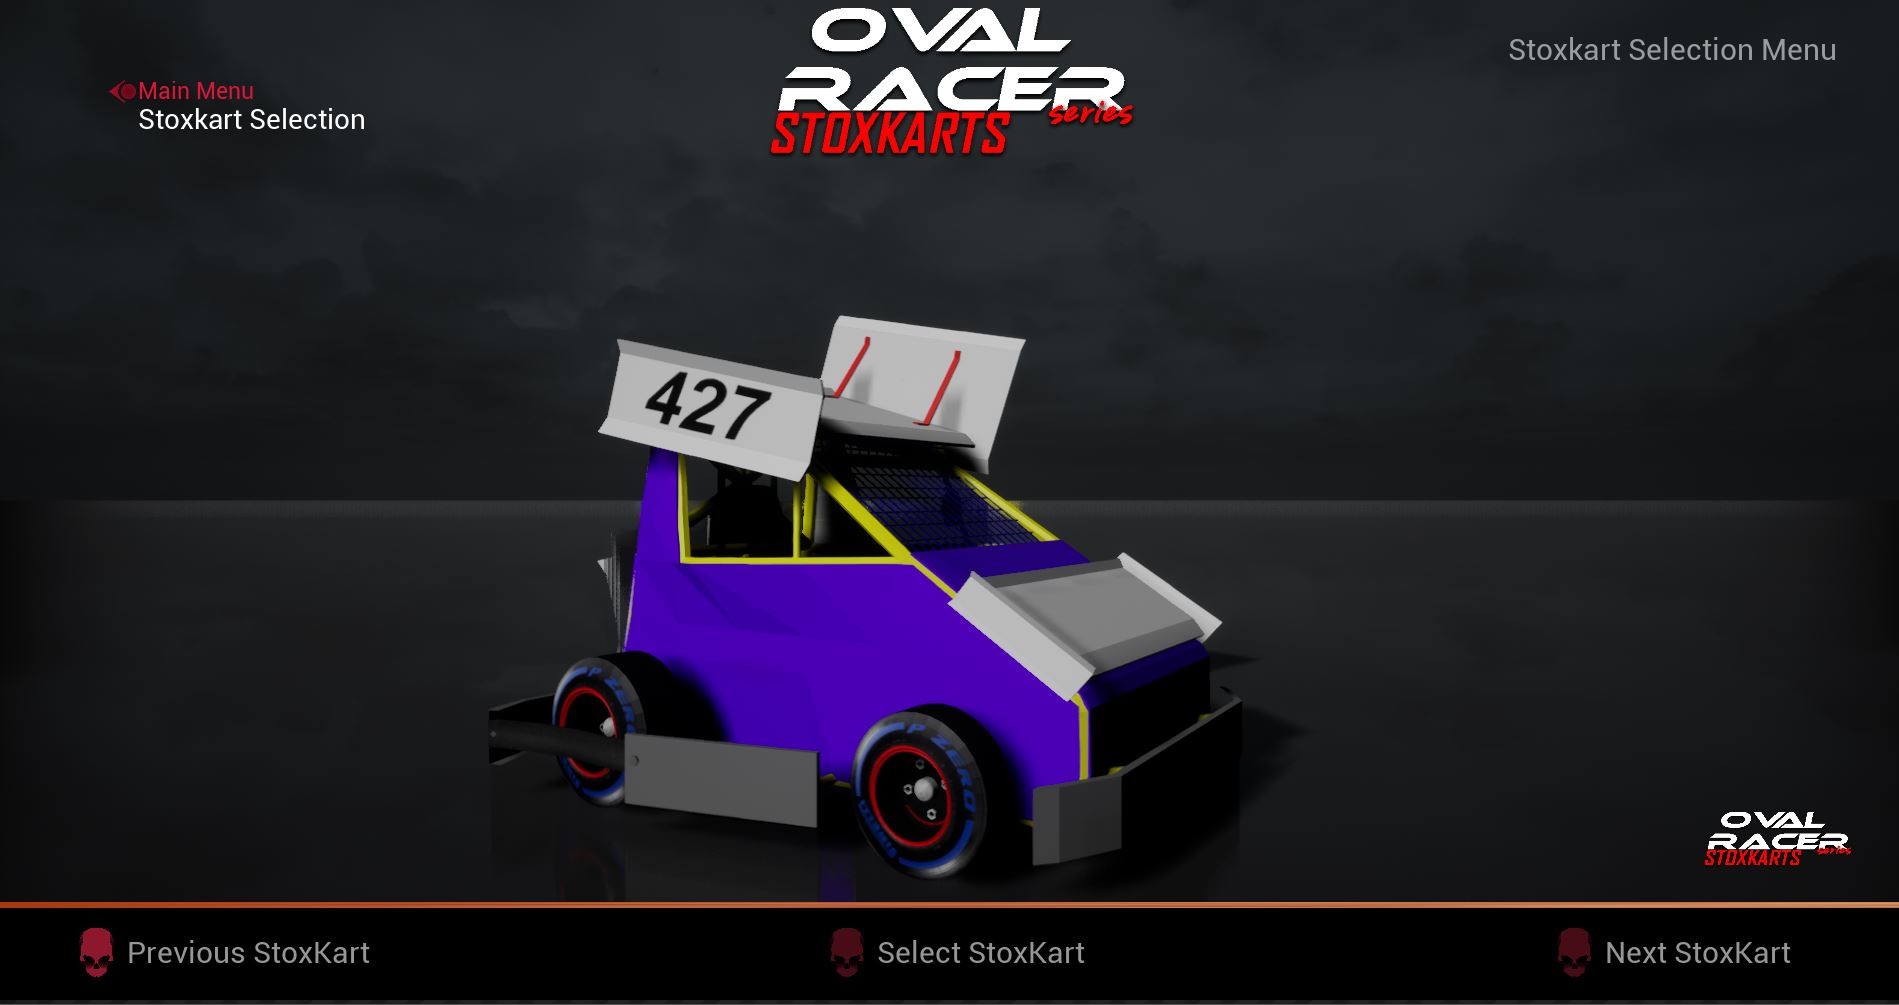 Oval Racer Series - Stoxkarts